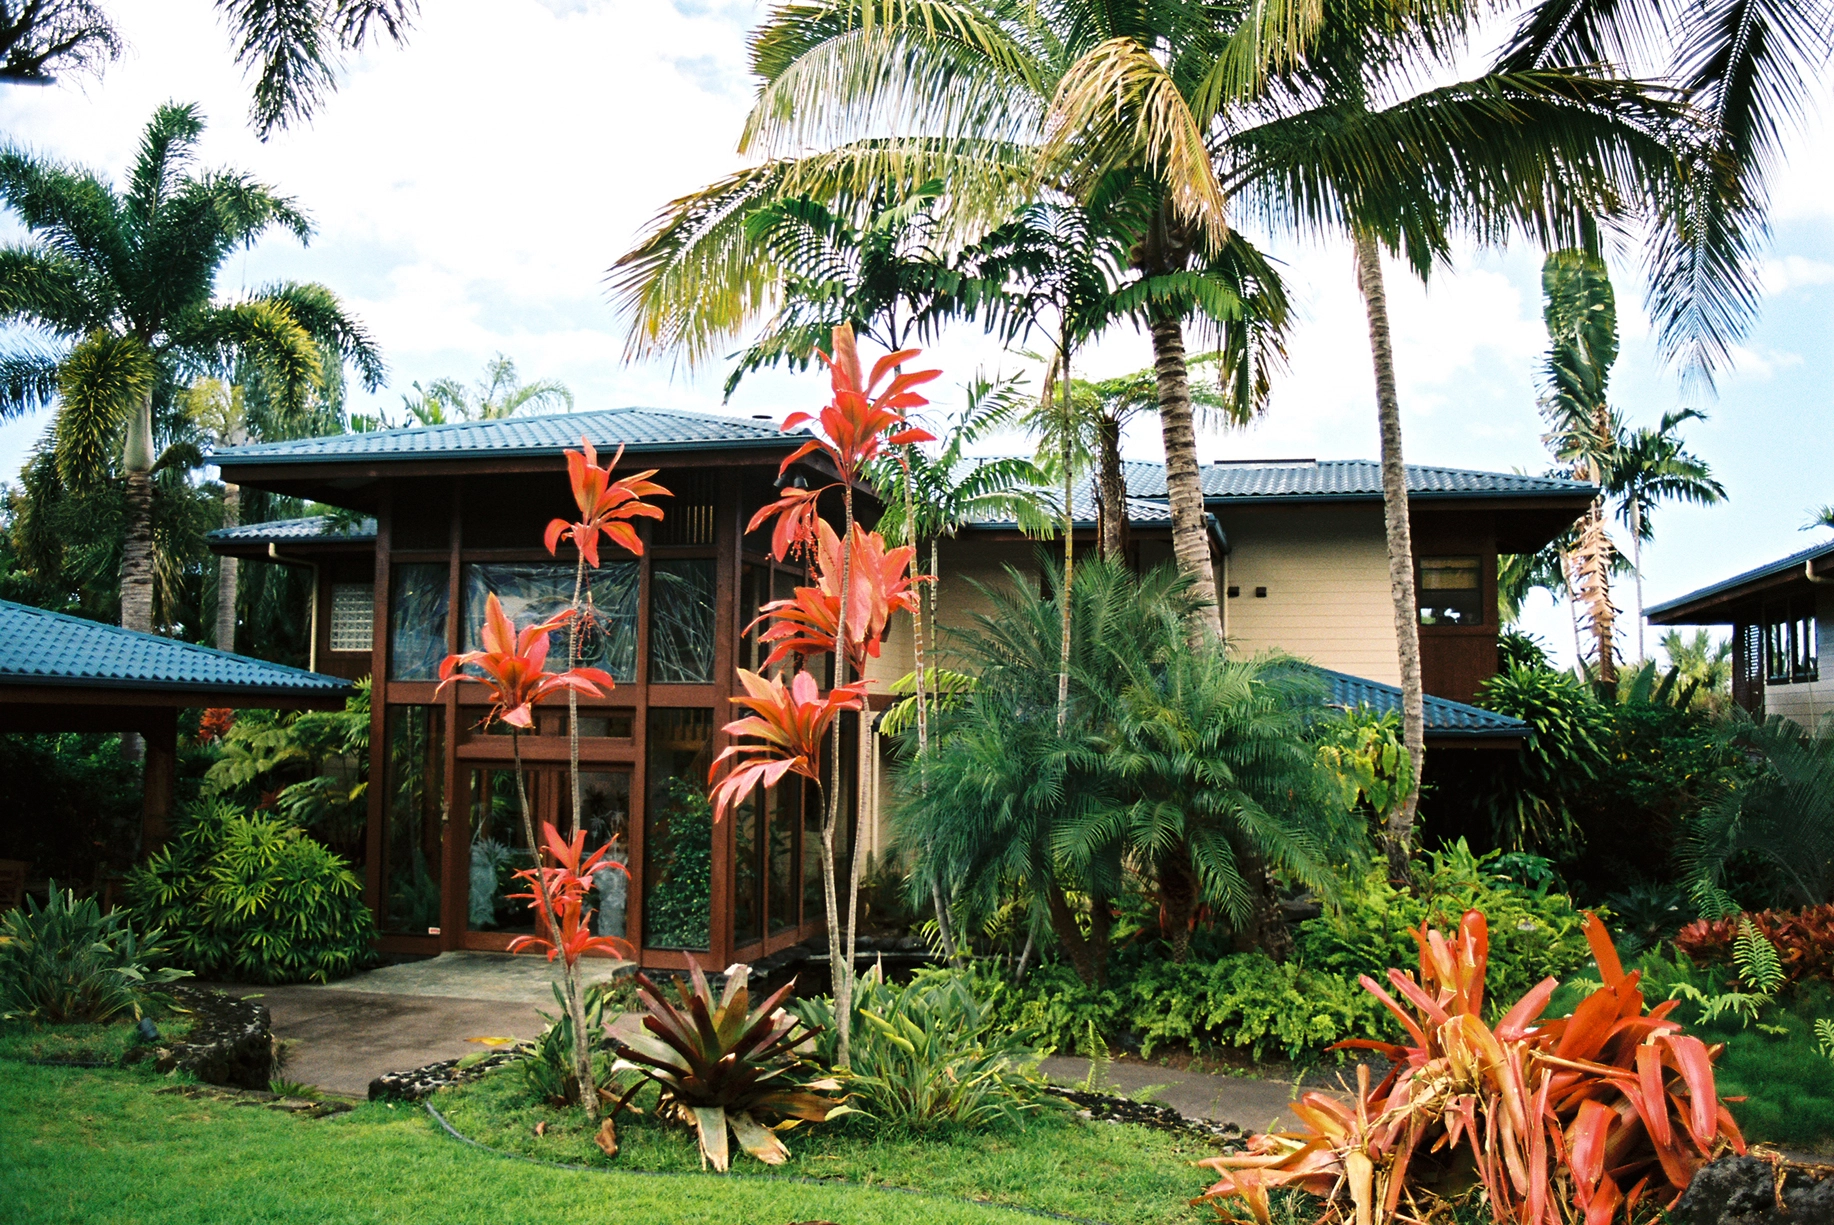 homes for sale big island Hawaii